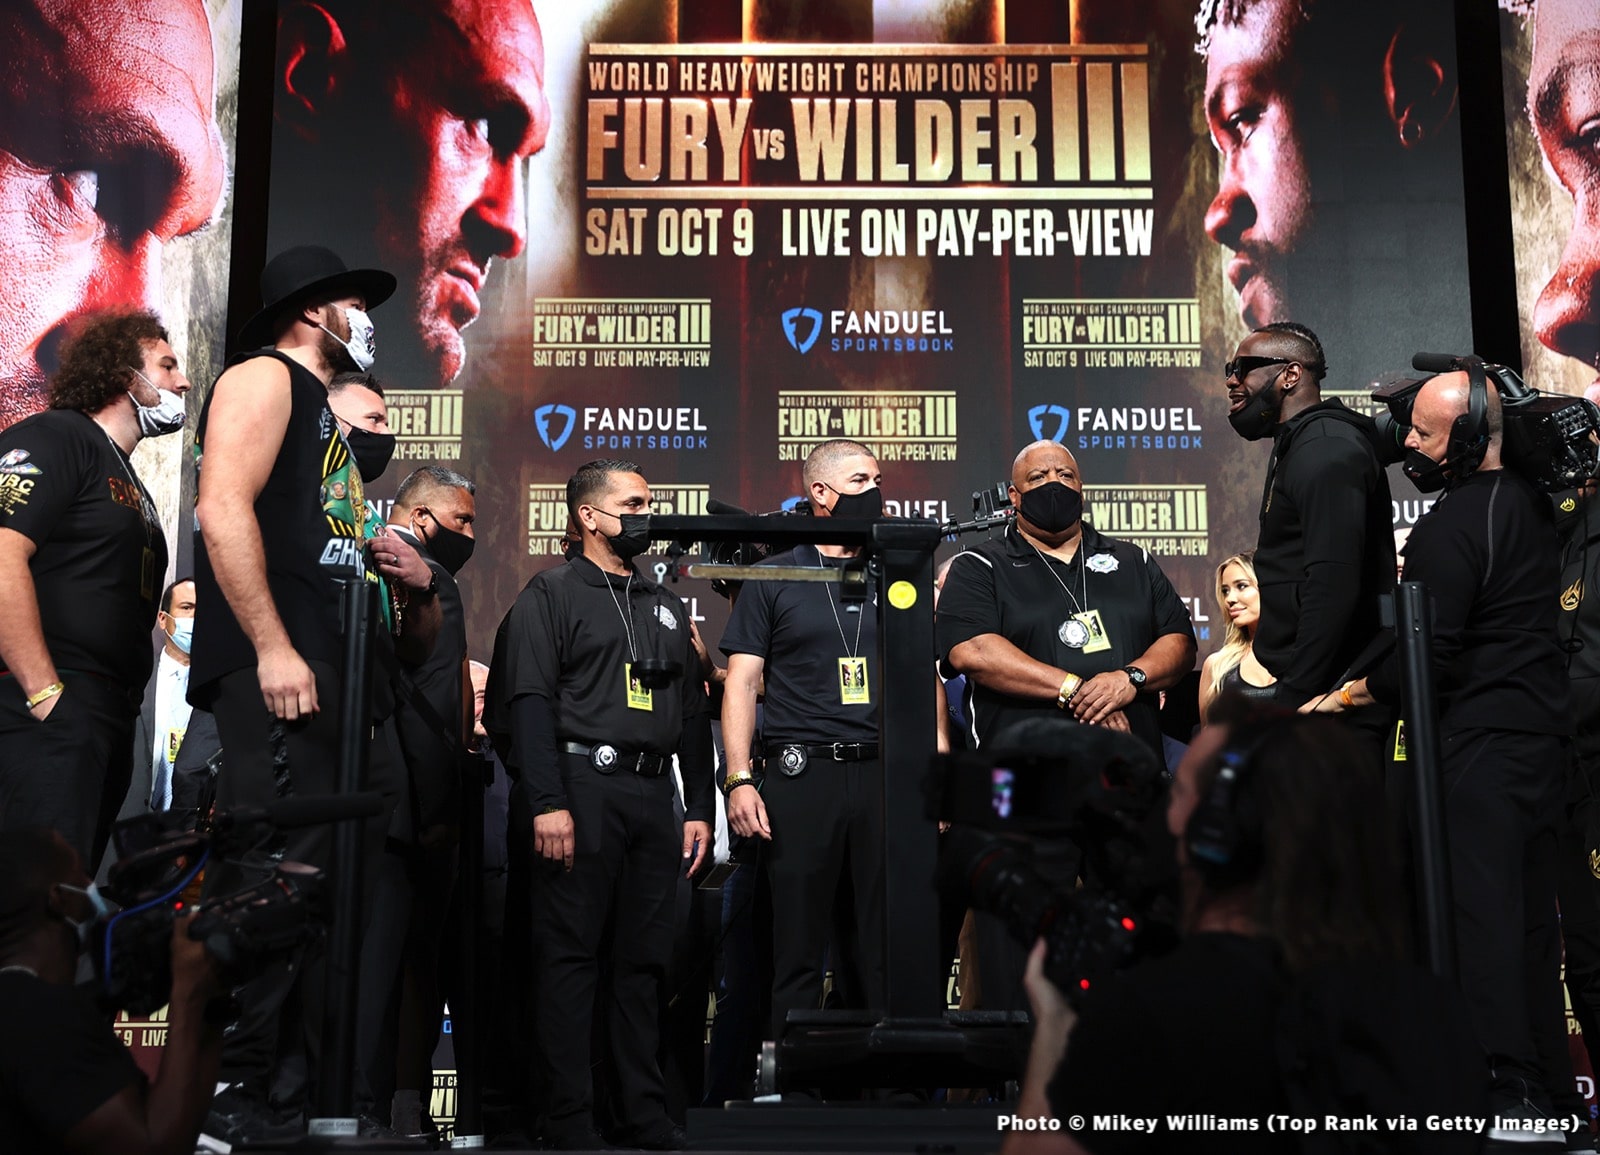 Deontay Wilder, Lennox Lewis, Tyson Fury boxing image / photo